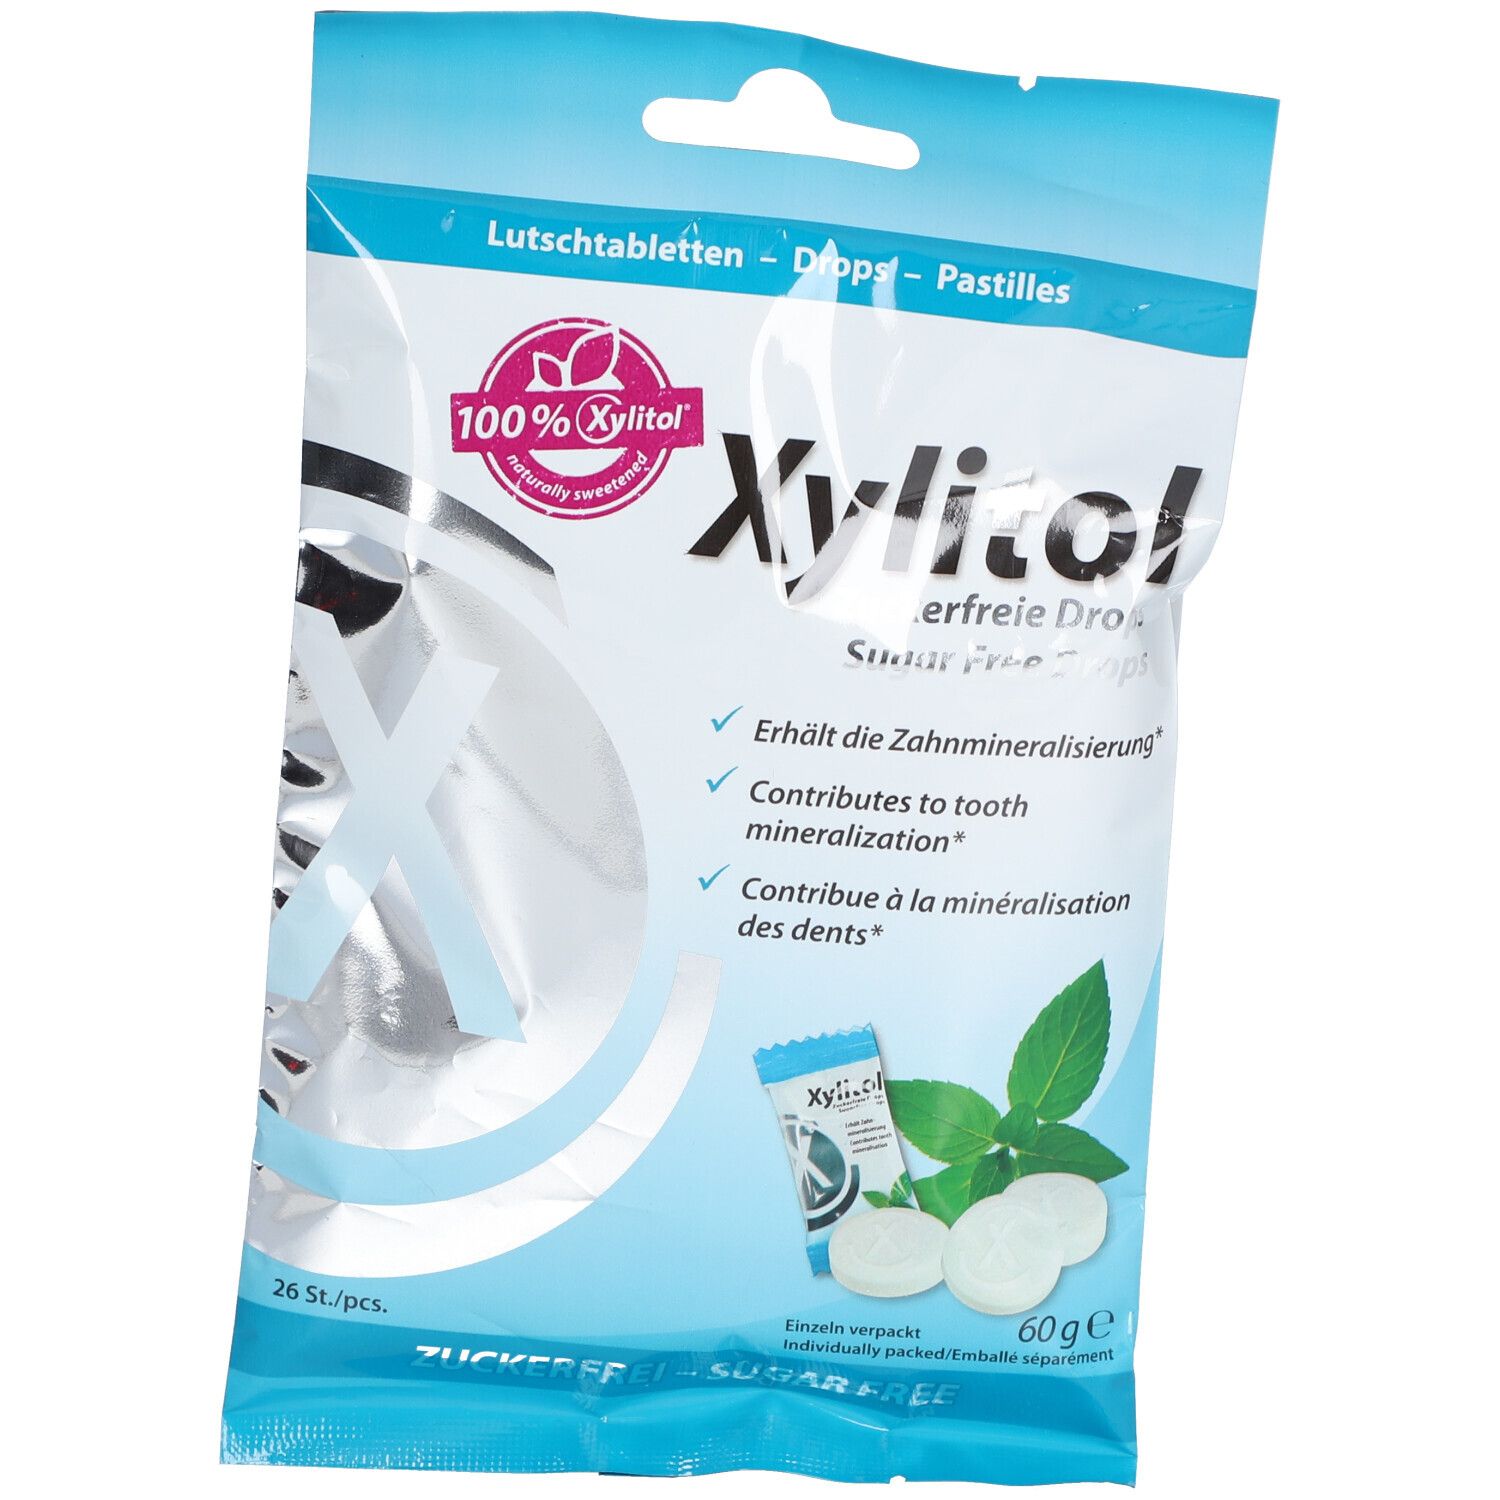 miradent Xylitol Drops Mint sans sucre